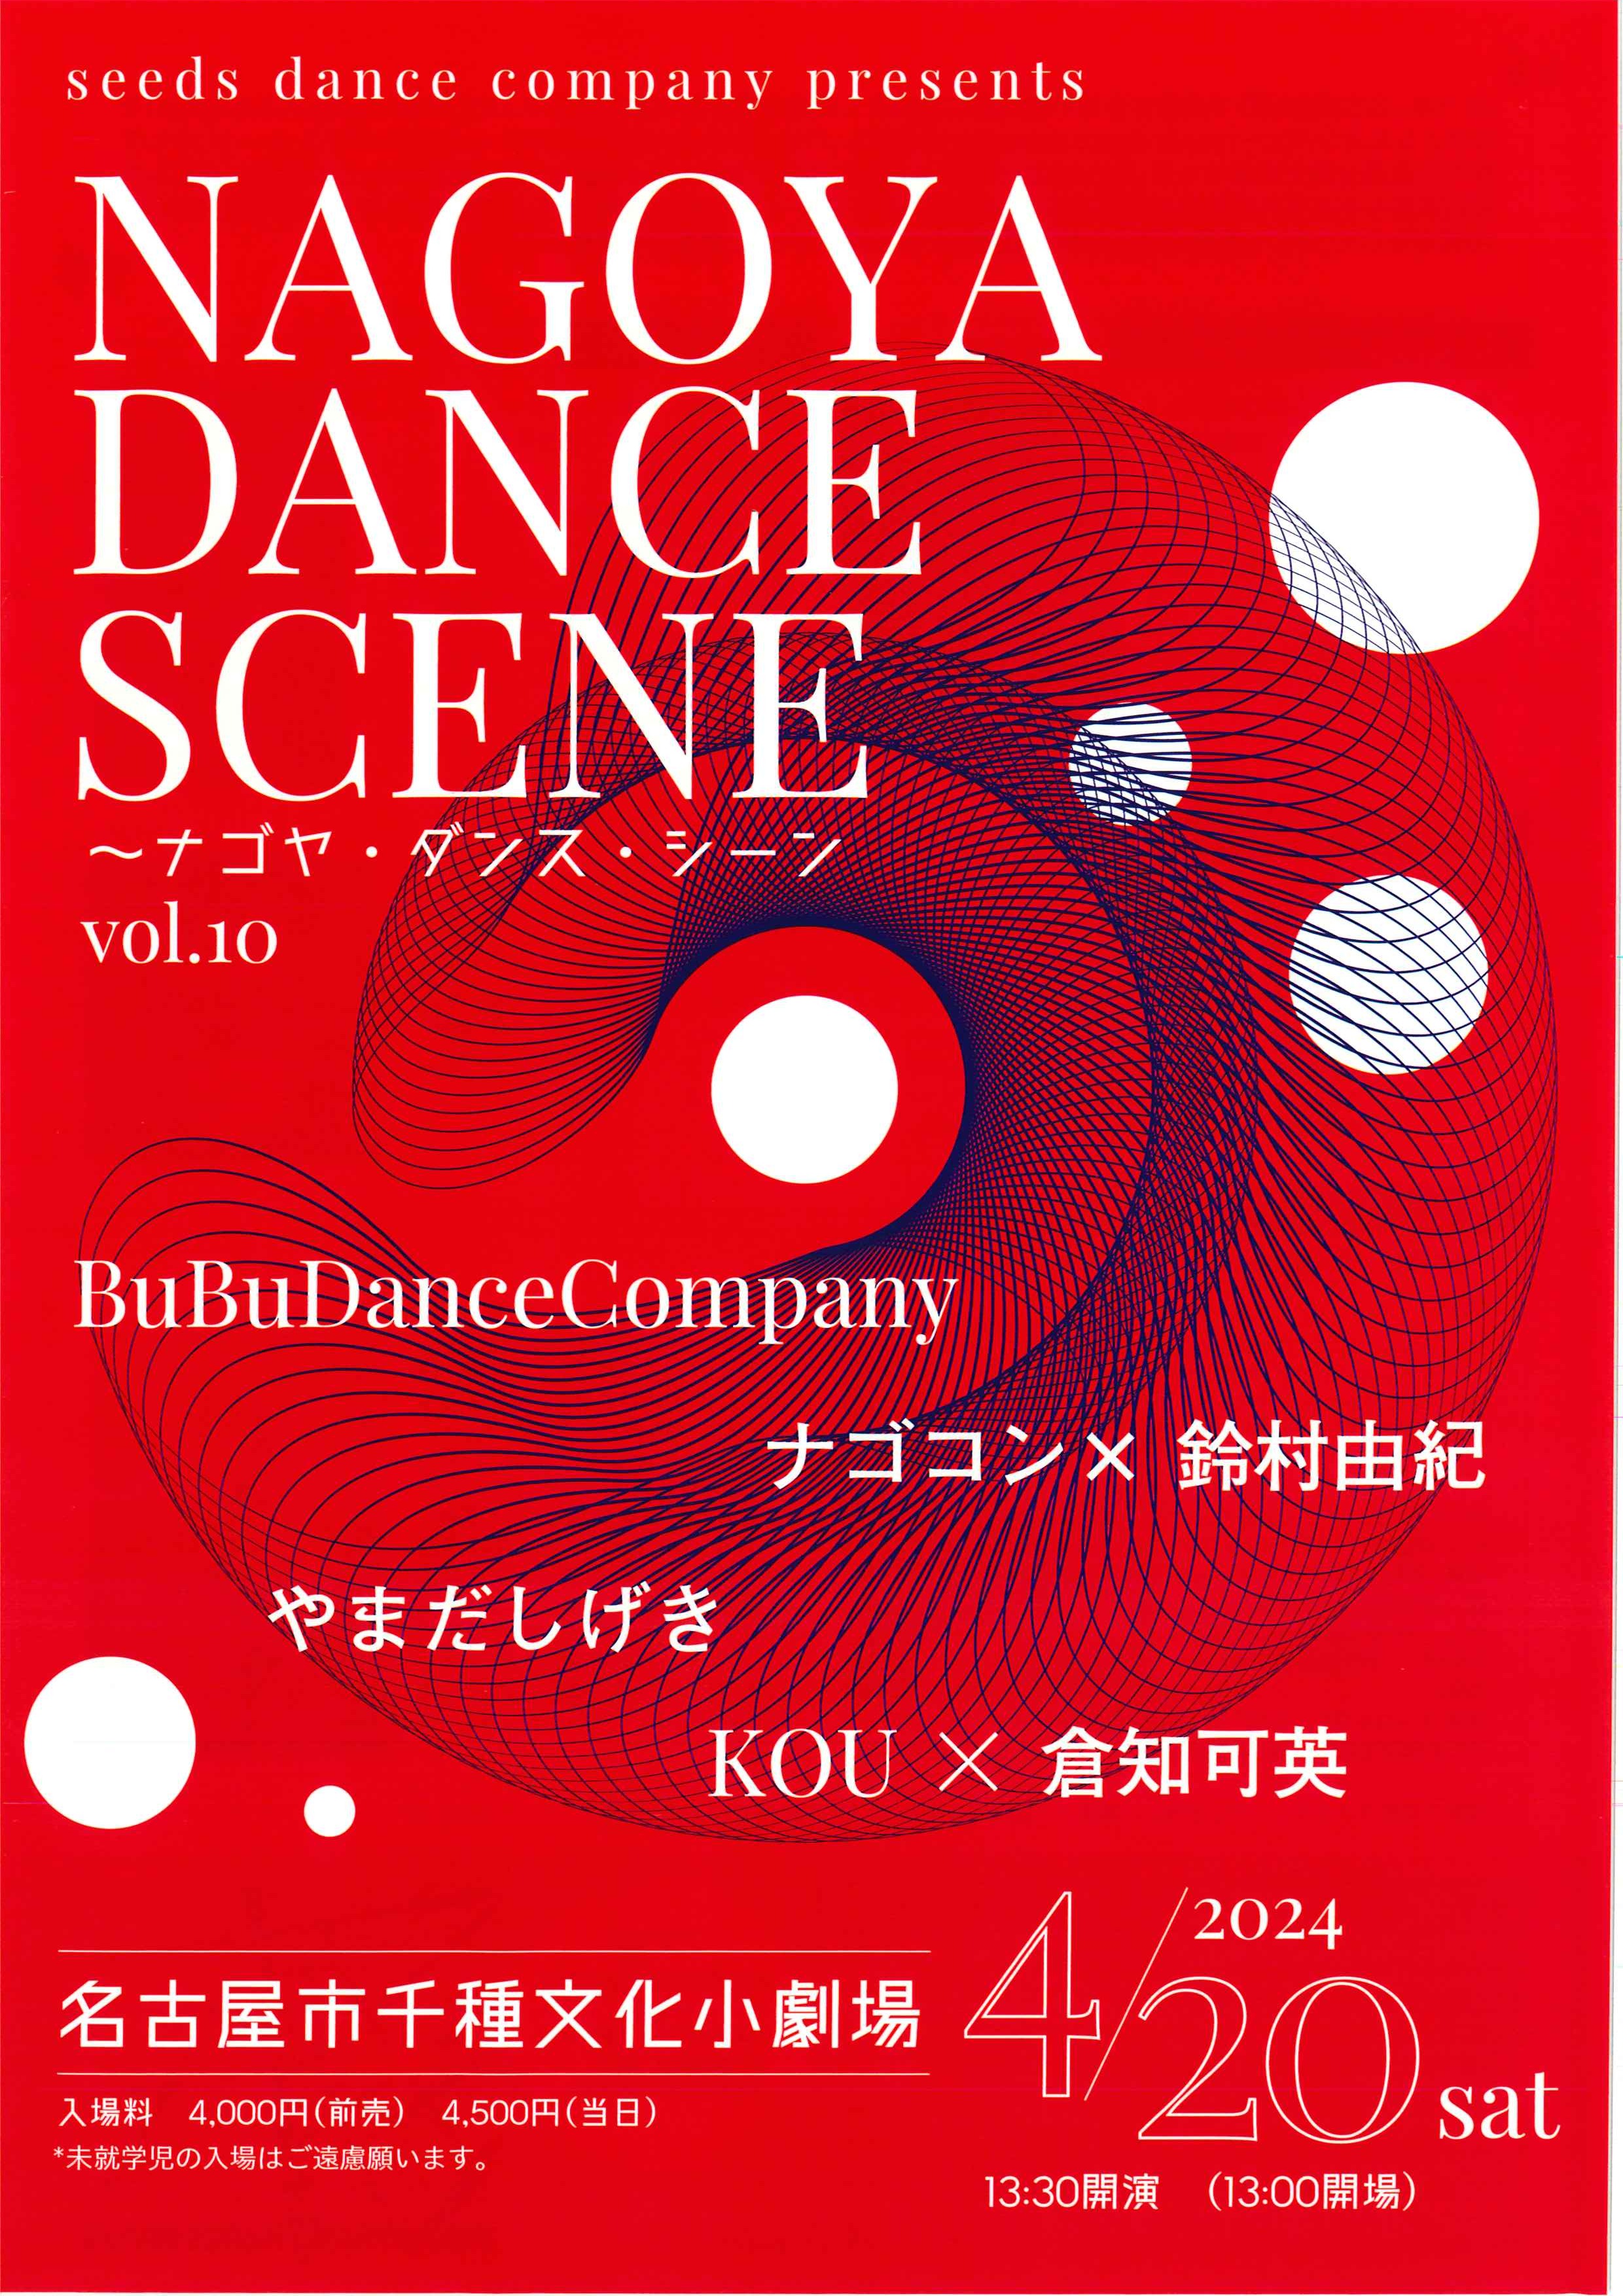 NAGOYA DANCE SCENE～ナゴヤ・ダンス・シーン vol.10のチラシ